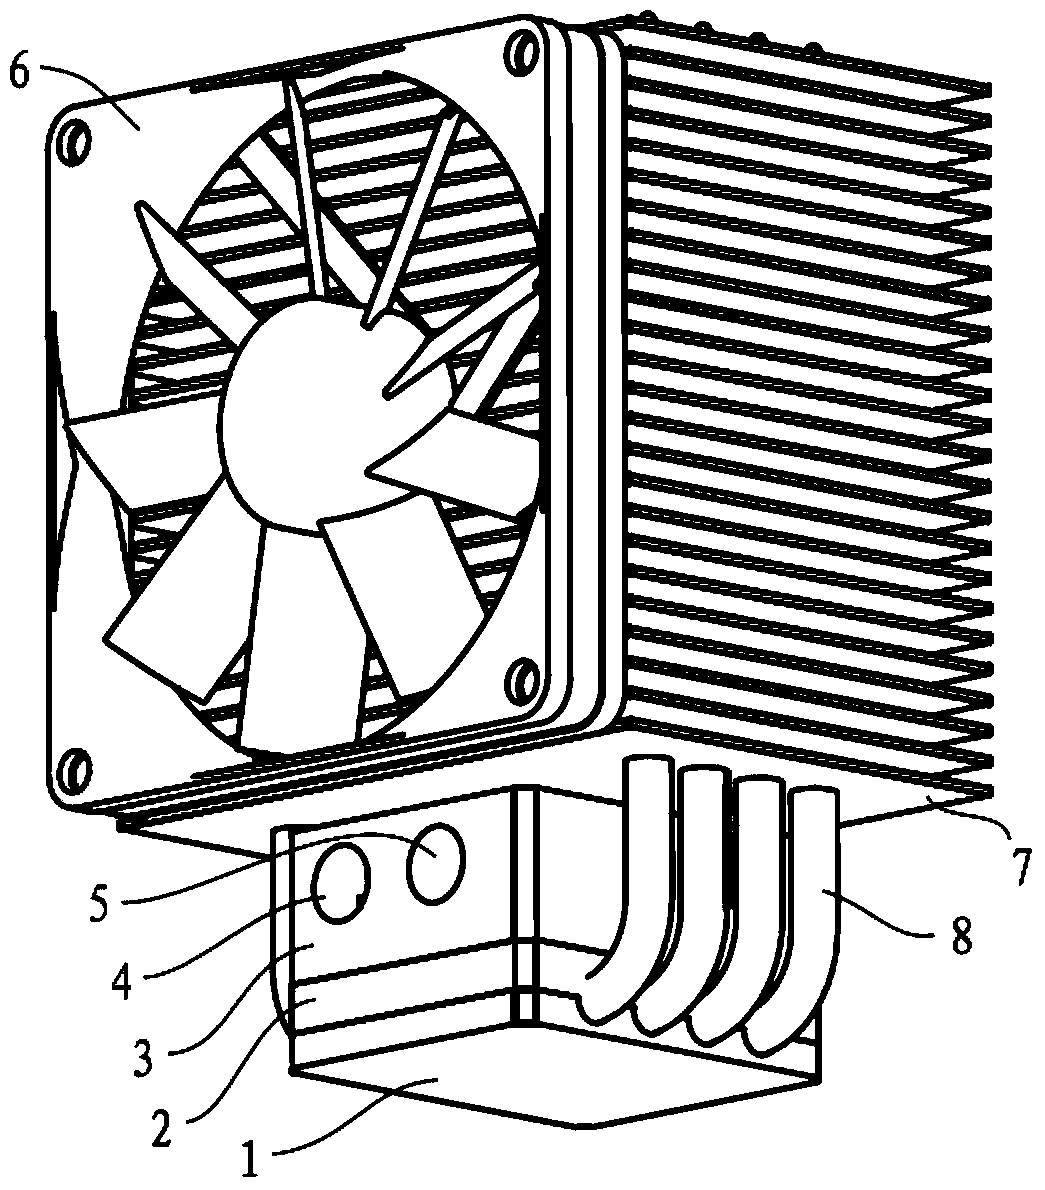 Air cooling and liquid cooling dual-purpose heat radiator